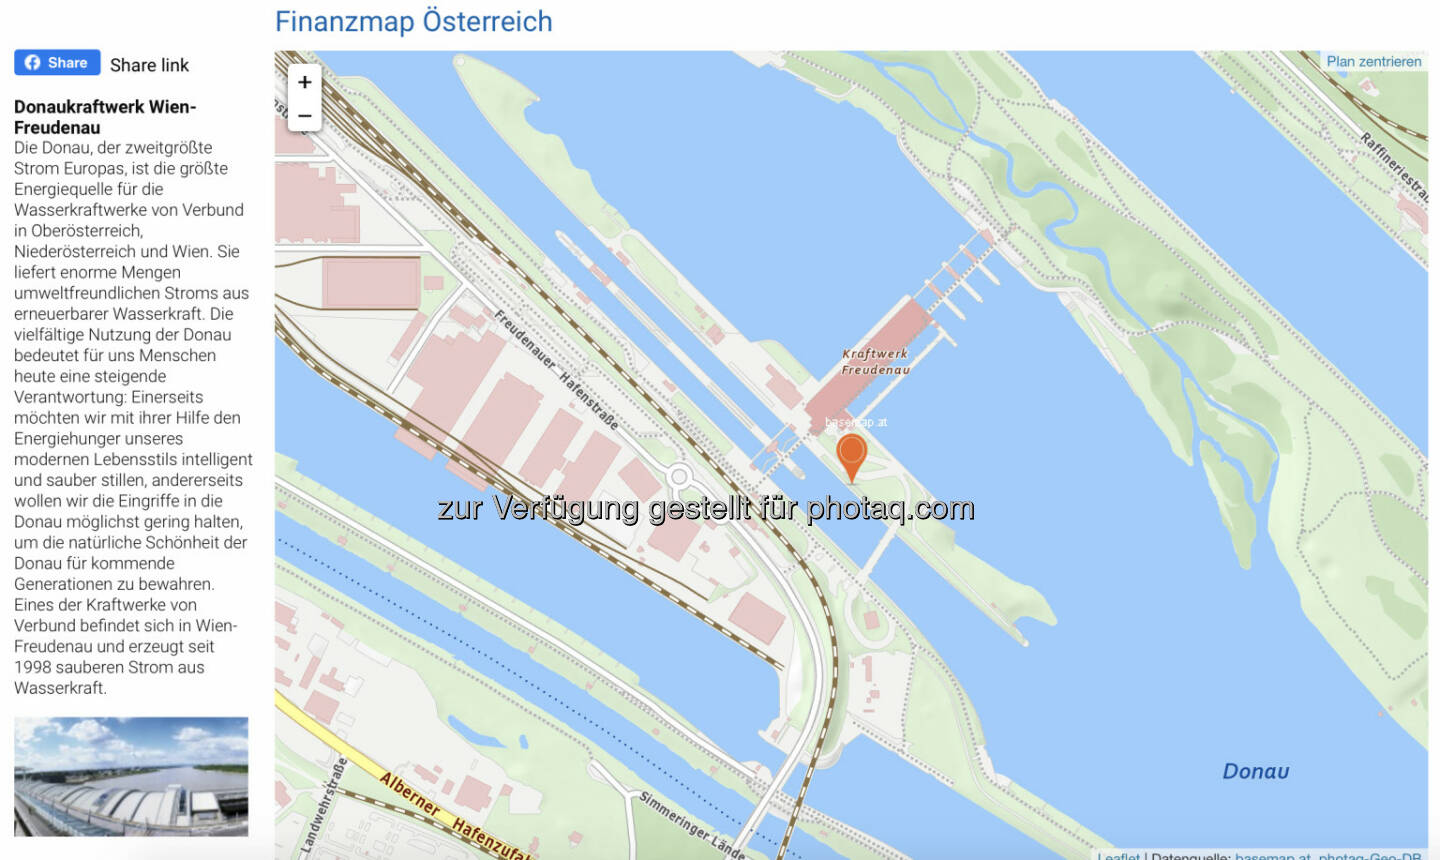 Verbund Donaukraftwerk Wien-Freudenau auf http://www.boerse-social.com/finanzmap